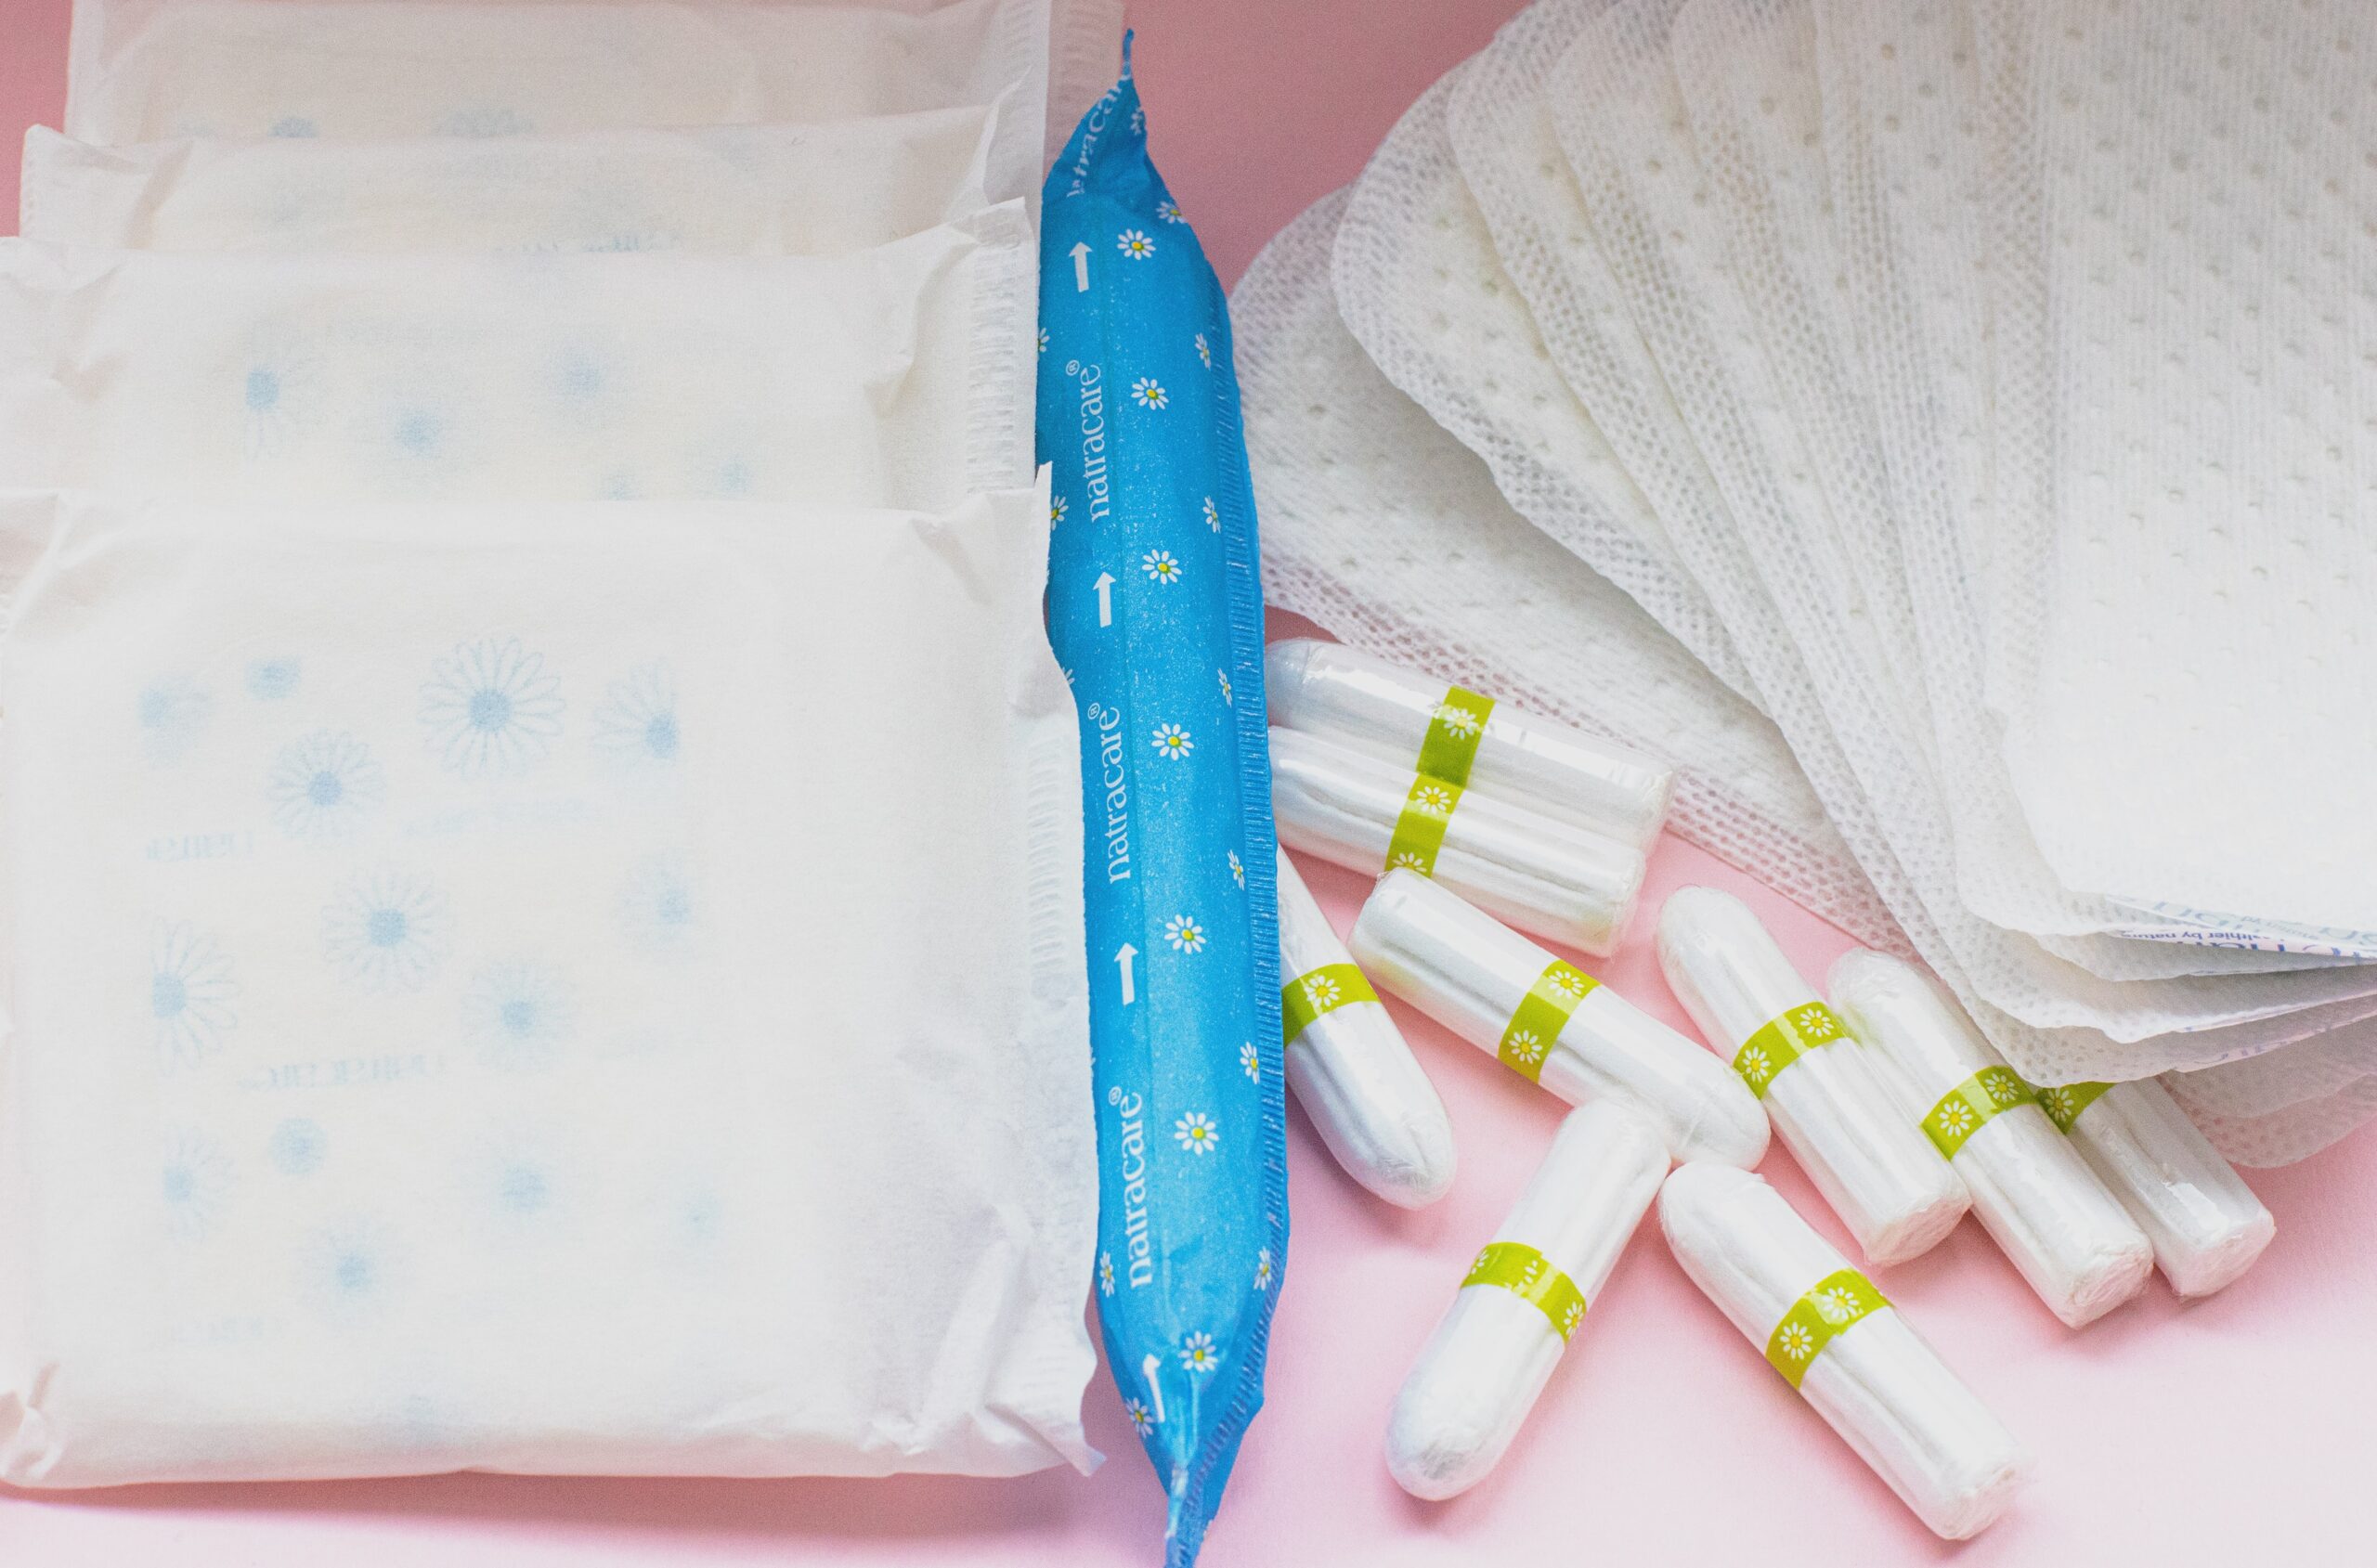 menstrual hygiene products